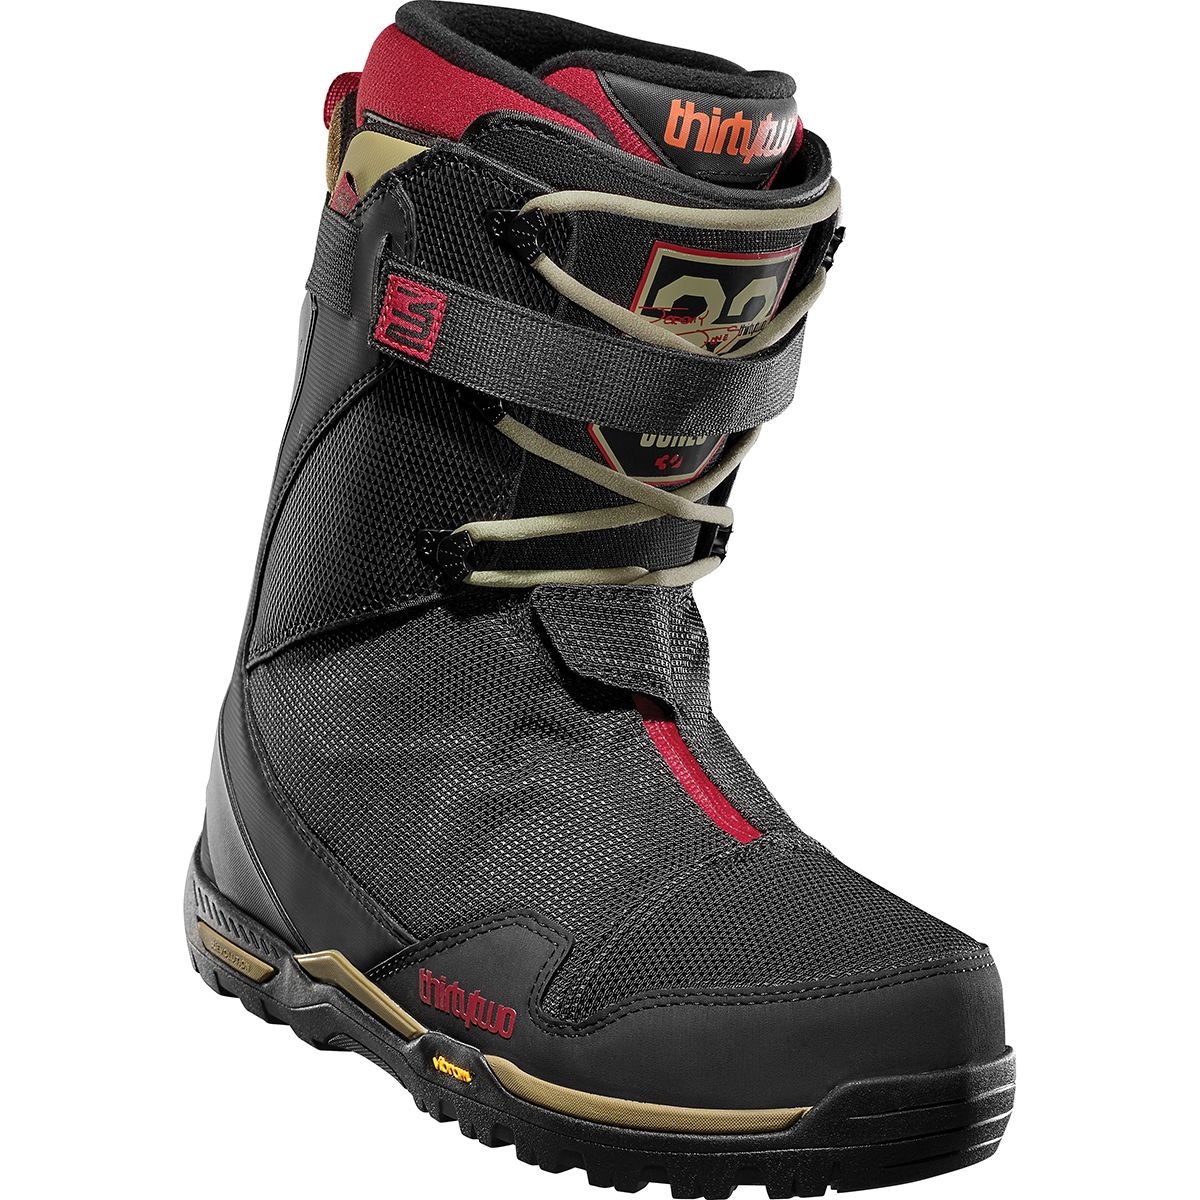 ThirtyTwo TM-2 XLT Snowboard Boot - Men's Jones 11.0 889262816167 | eBay